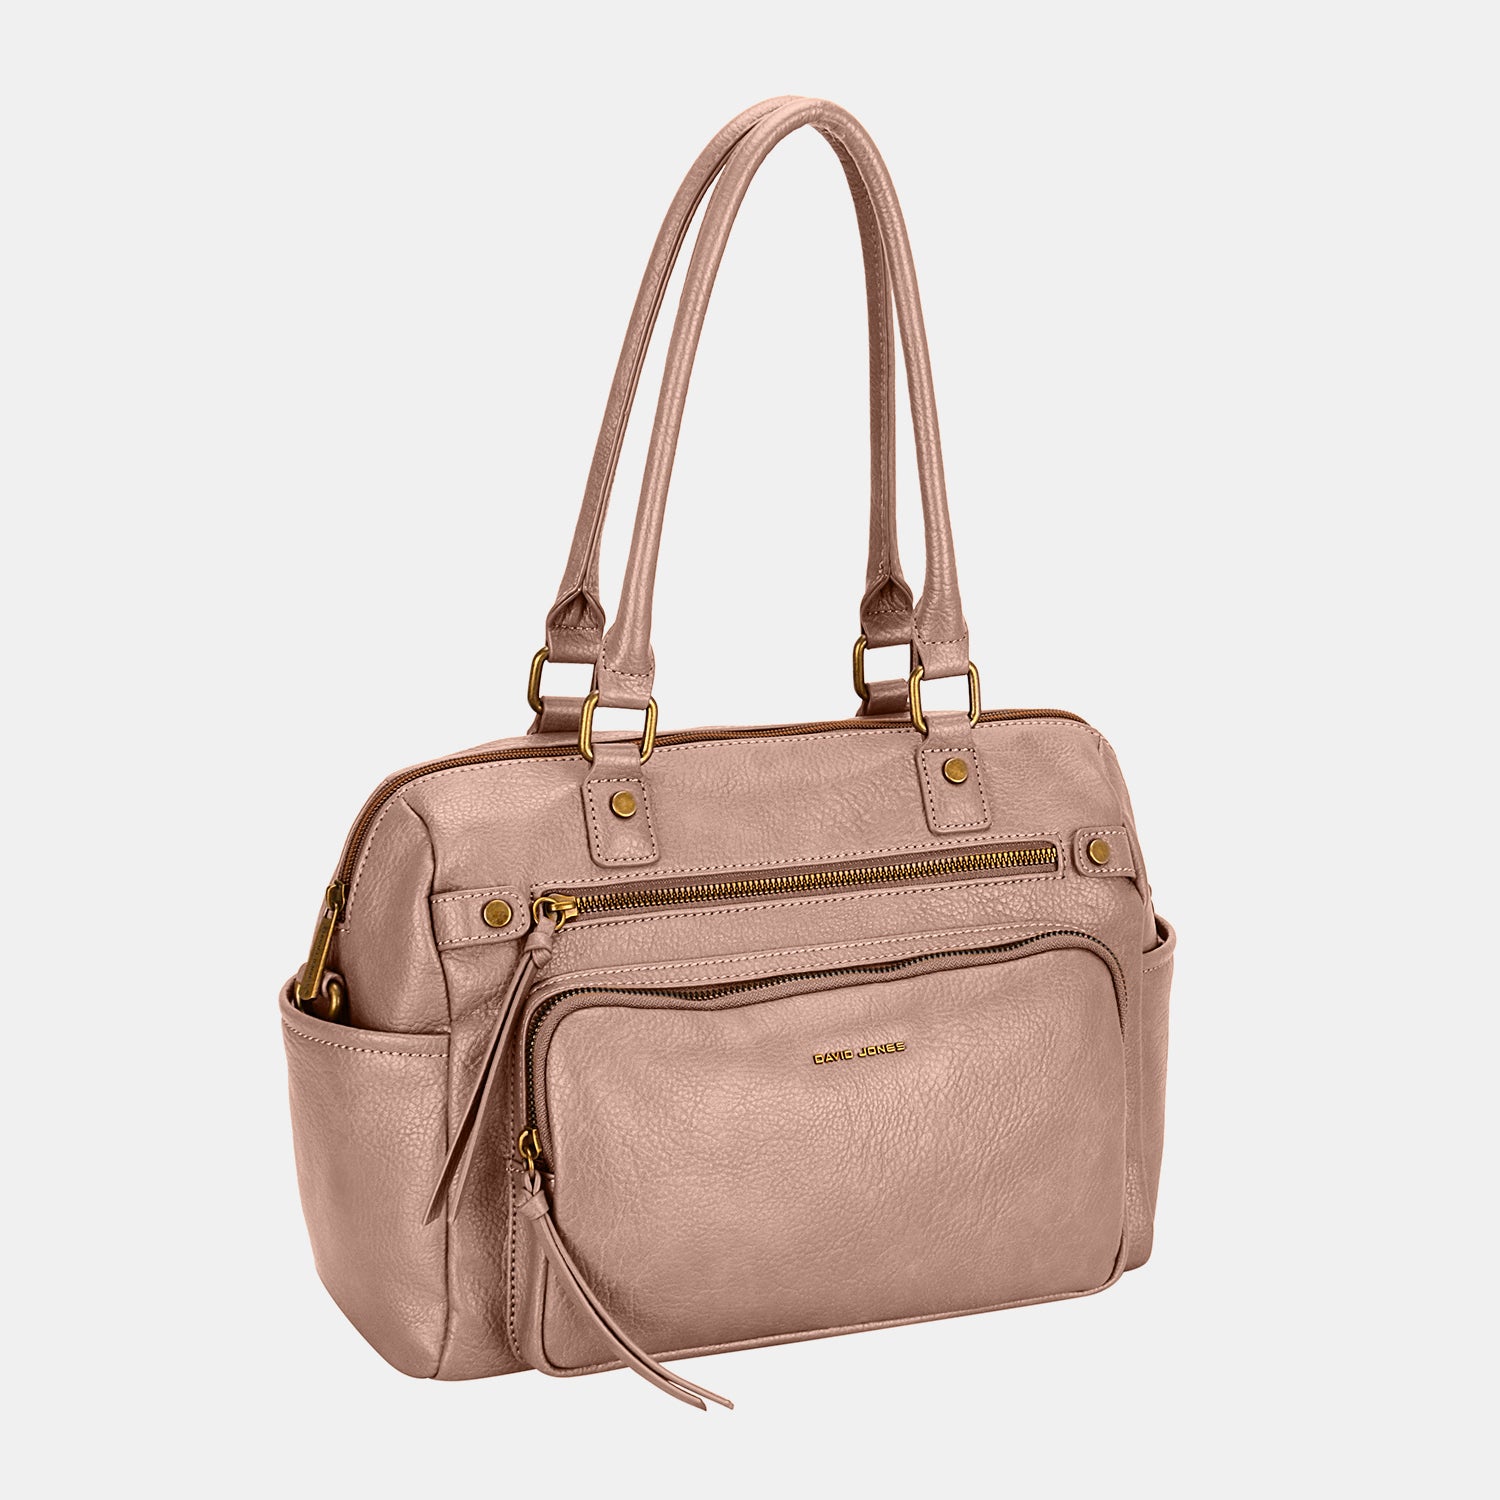 David Jones Zipper PU Leather Handbag free shipping -Oh Em Gee Boutique